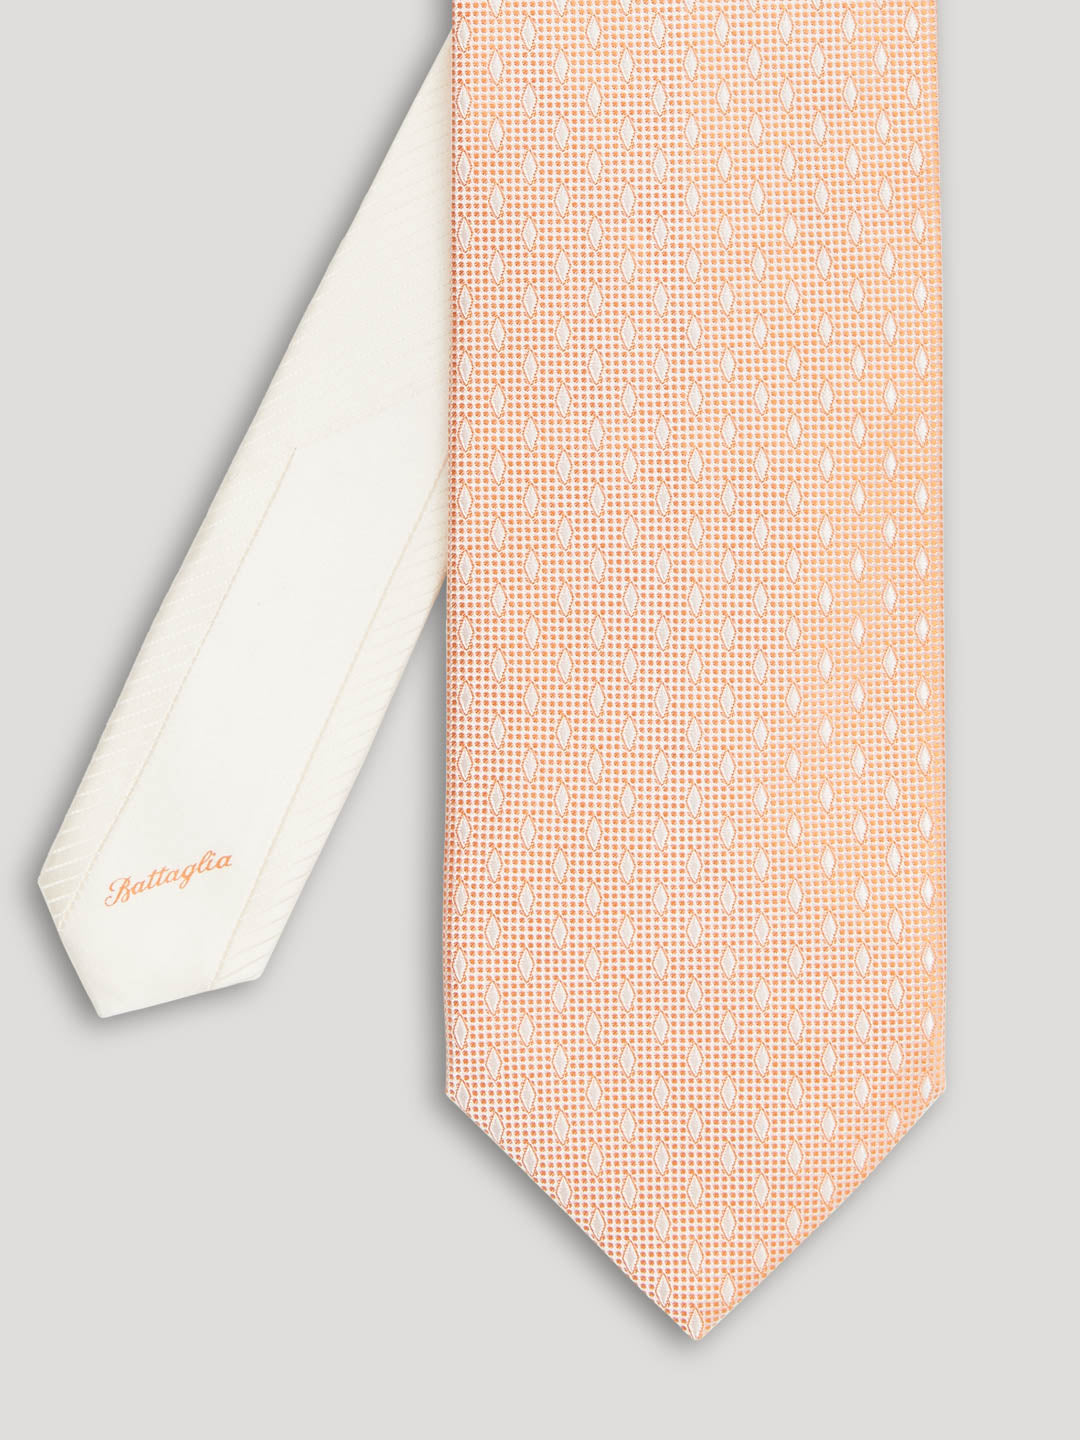 Peach tie with white diamond details on it.